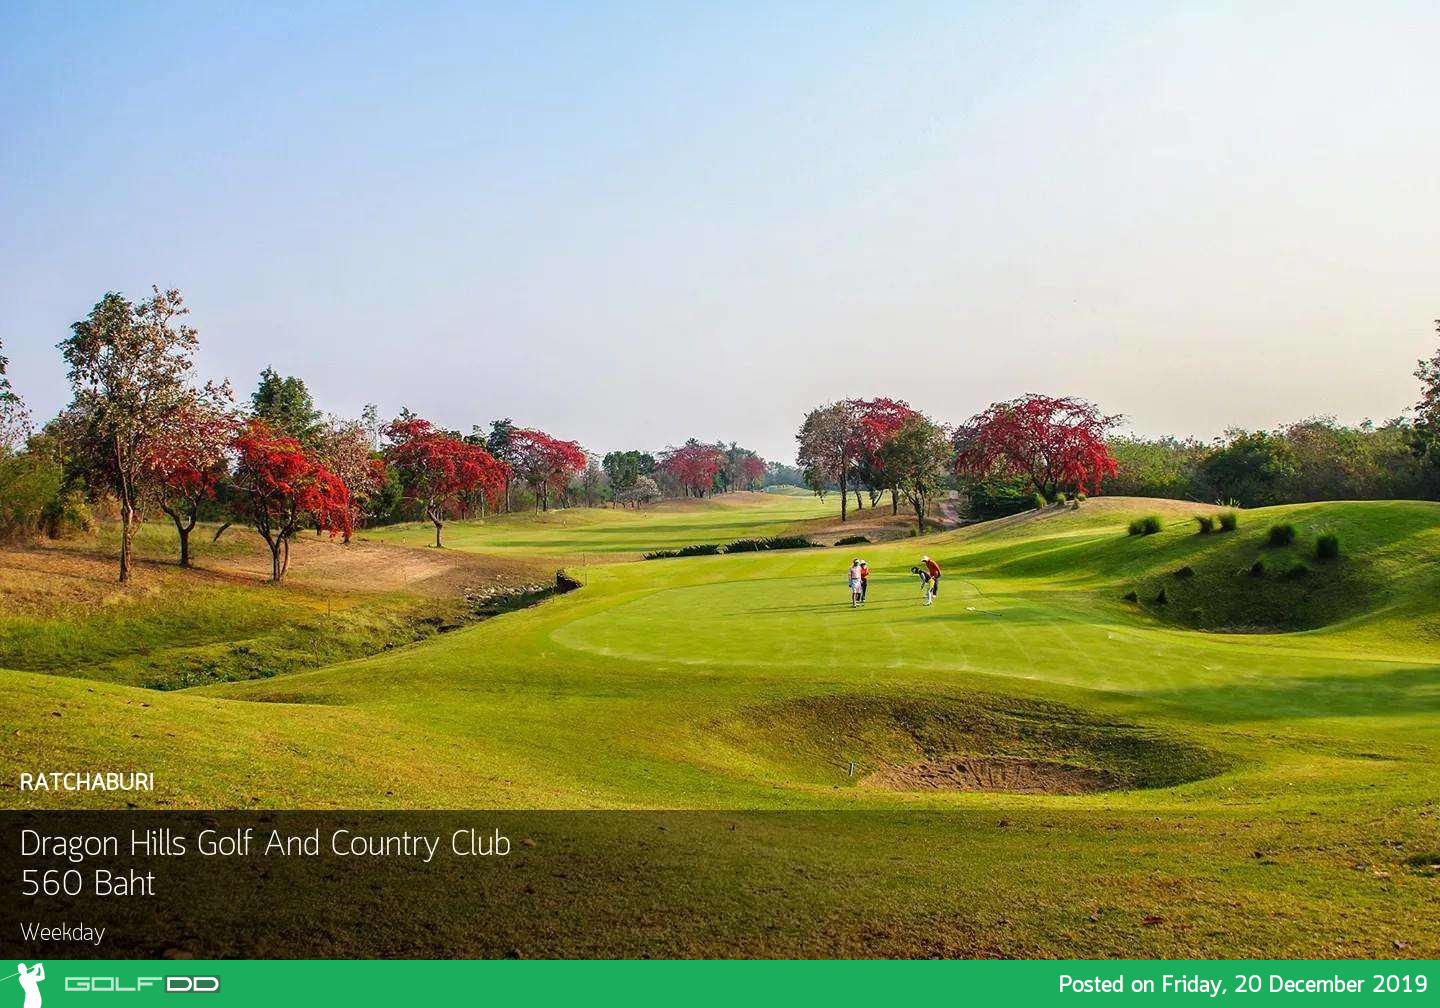 Dragon Hills Golf And Country Club มนต์ขลังจากธรรมชาติ แต่งแต้มสีสันด้วยทิวทัศน์อันงดงาม 